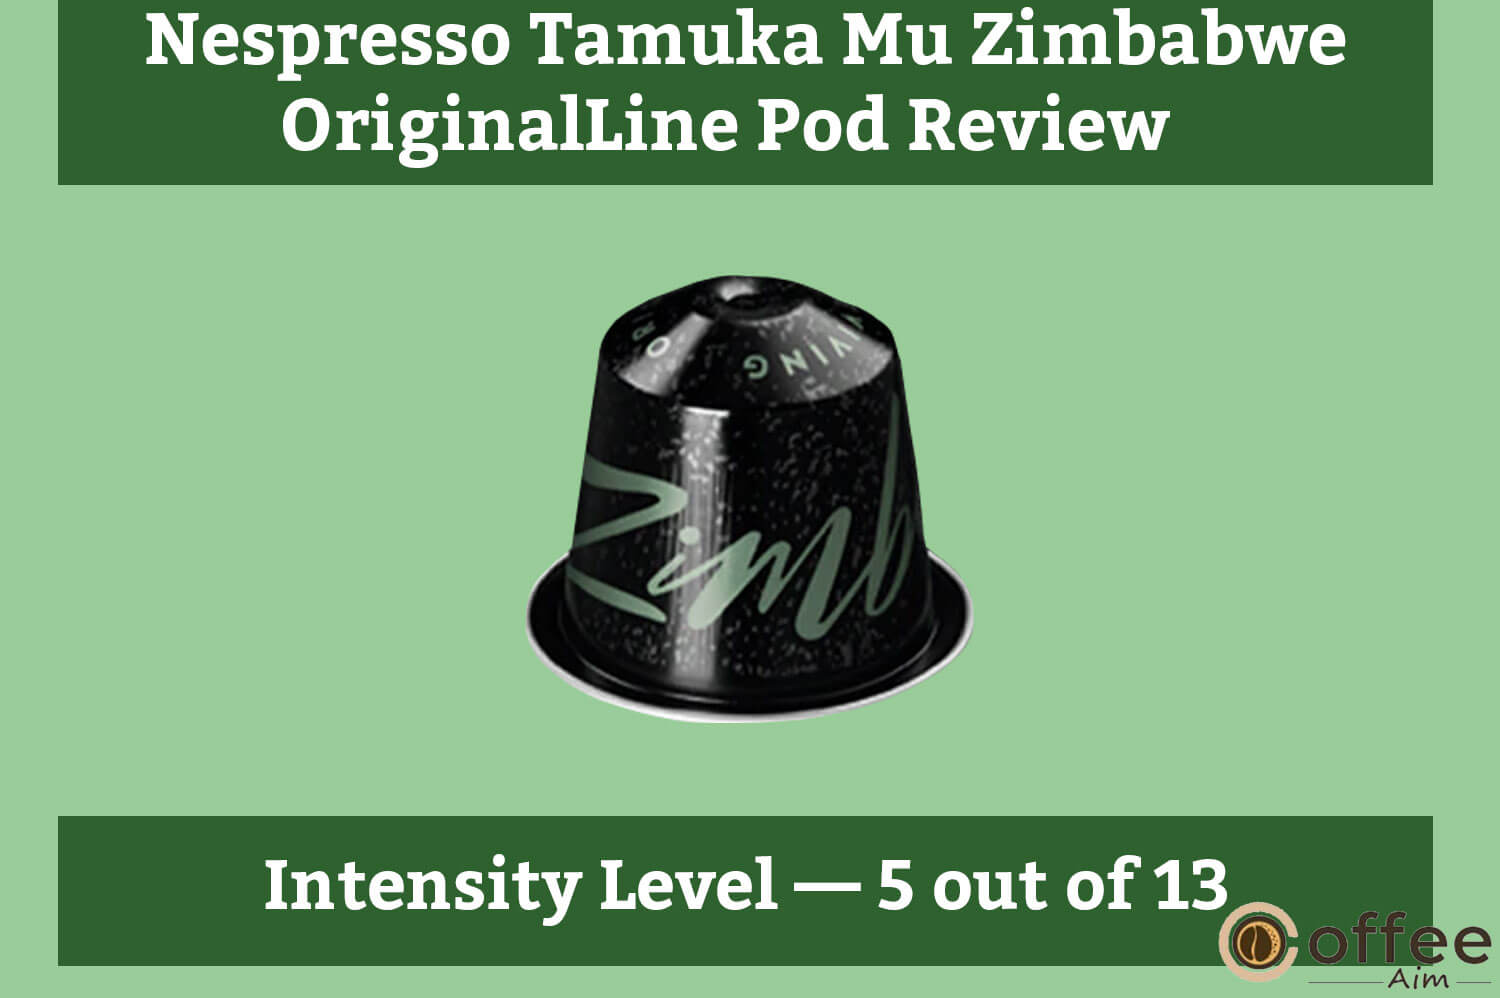 The image depicts the intensity of "Nespresso Tamuka Mu Zimbabwe OriginalLine Pod," central to the "Nespresso Tamuka Mu Zimbabwe OriginalLine Pod Review."